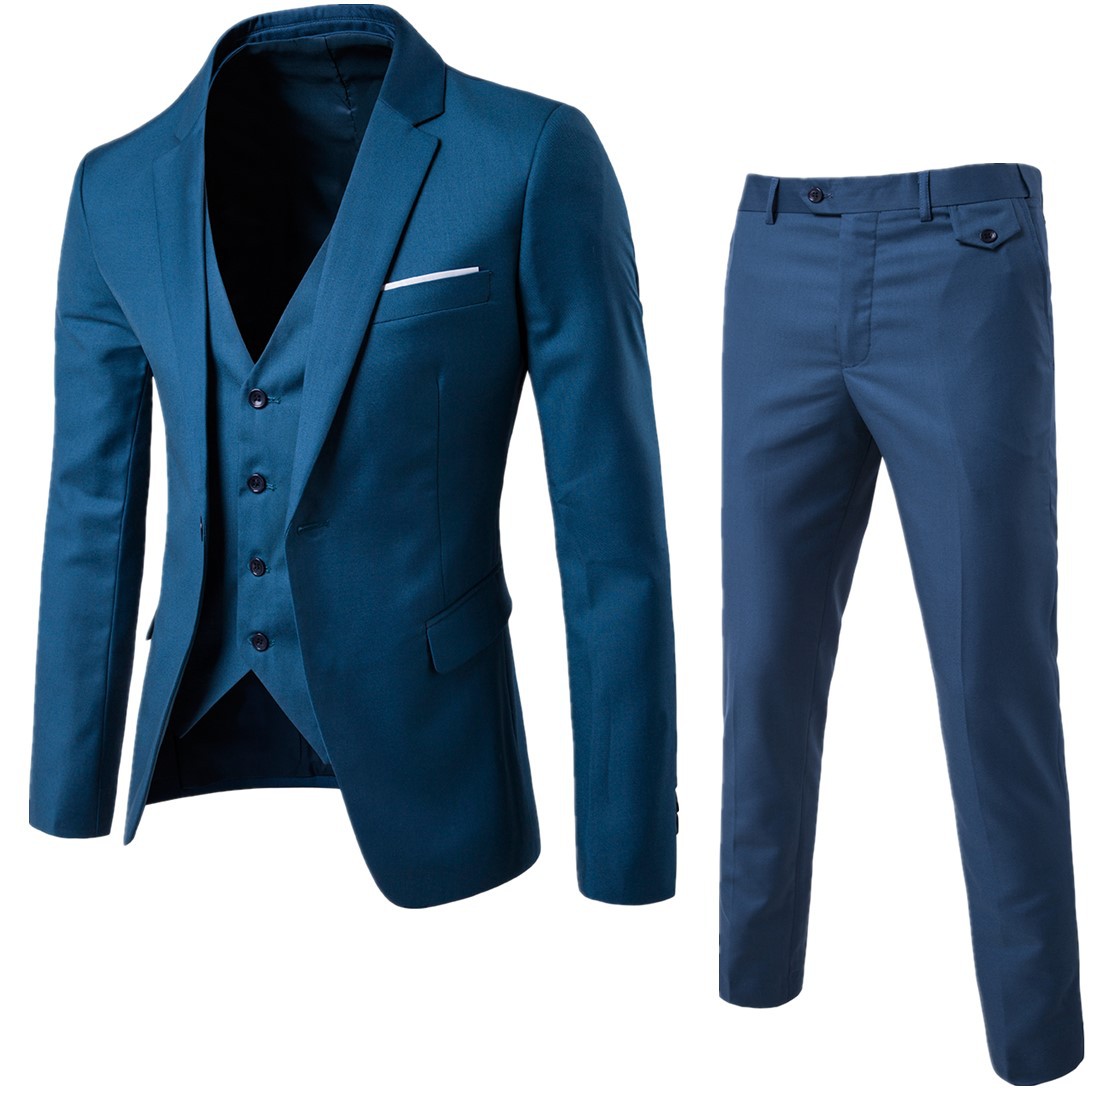 Suit men's three piece suit Korean slim suit business casual professional suit British style coat man